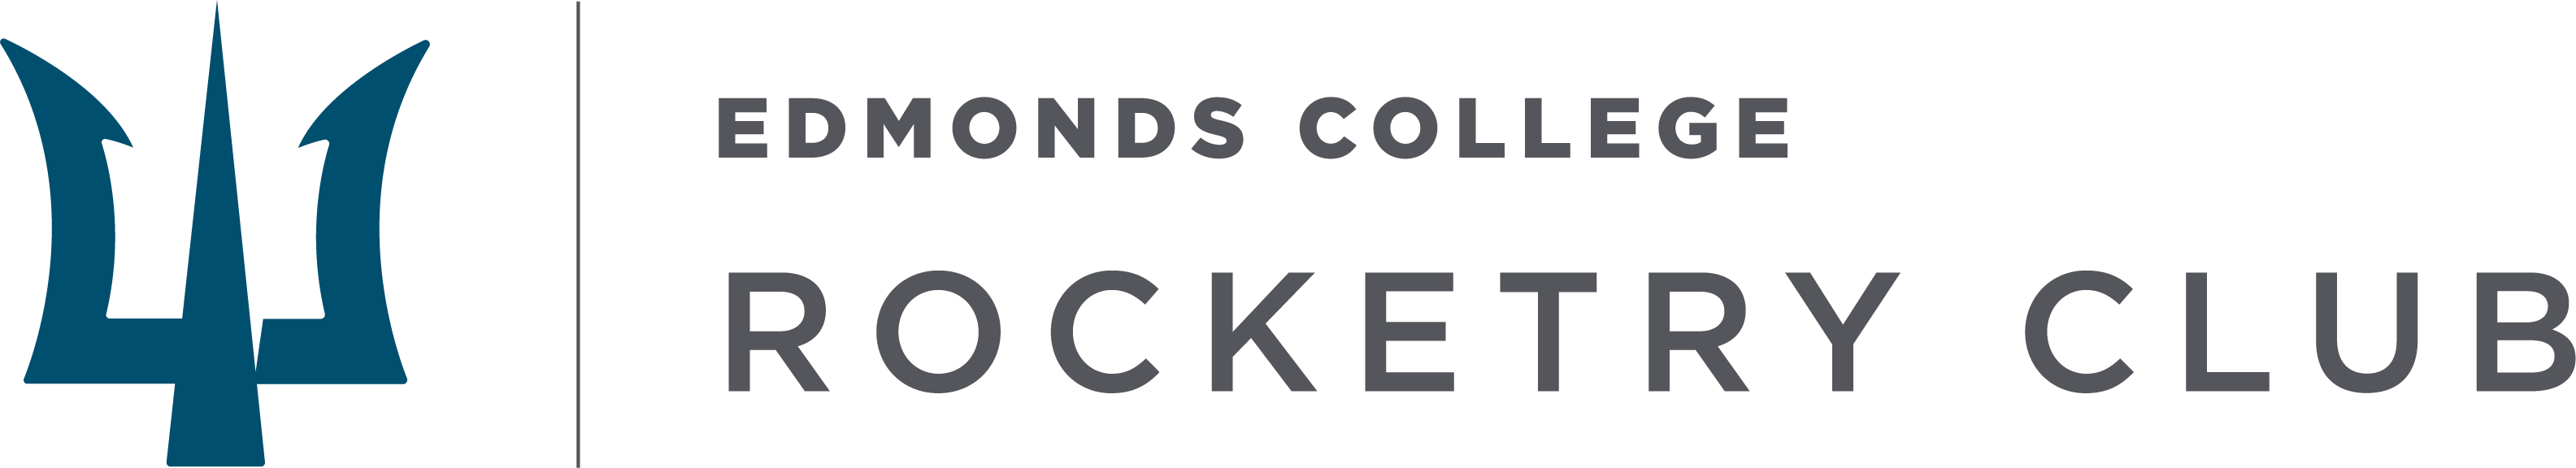 Rocketry Club logo